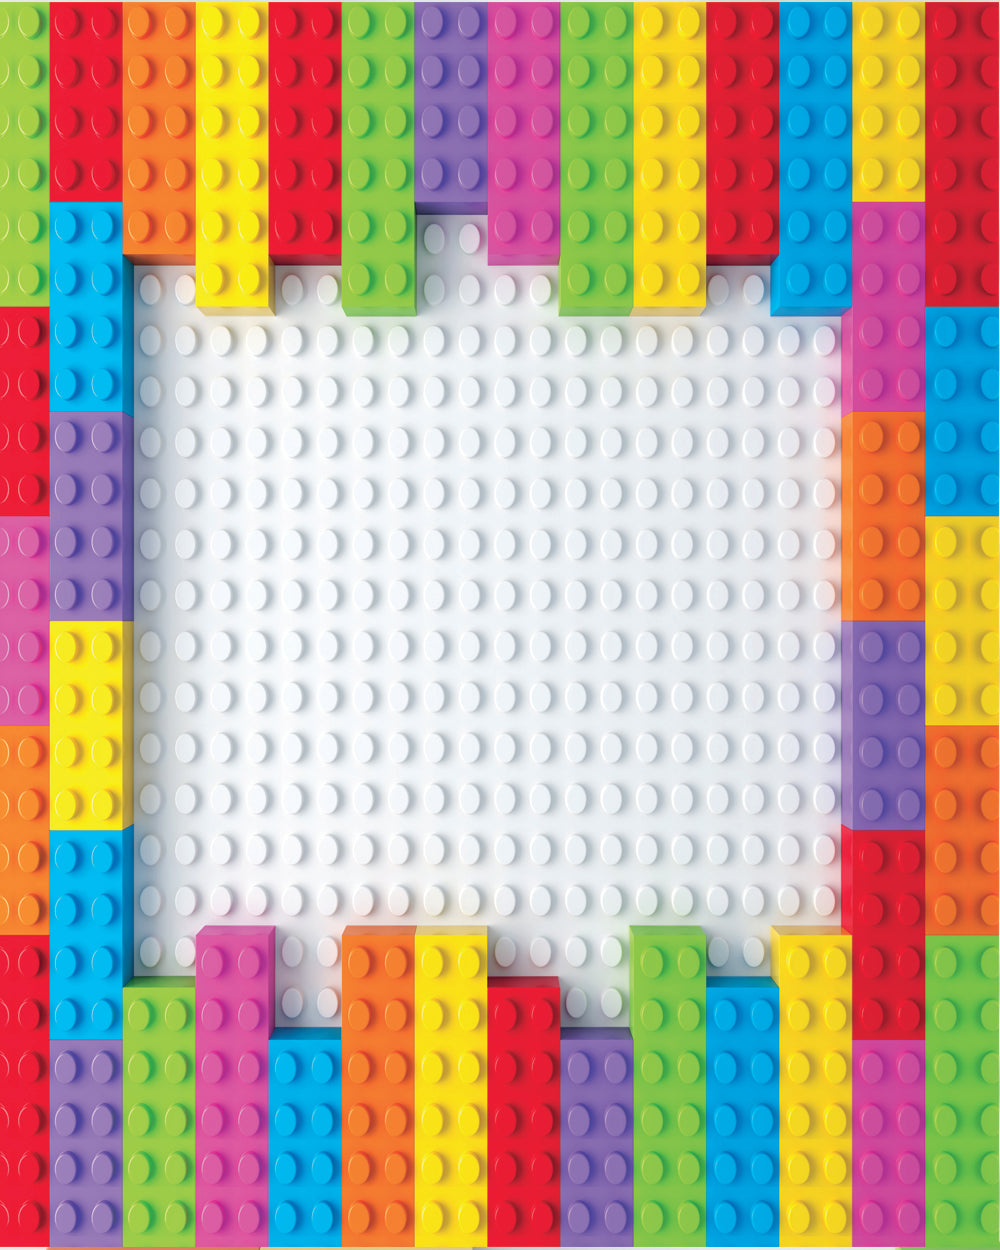 Lego Blocks Mouse Pad with Nonslip Base (SIZE 8"x9")